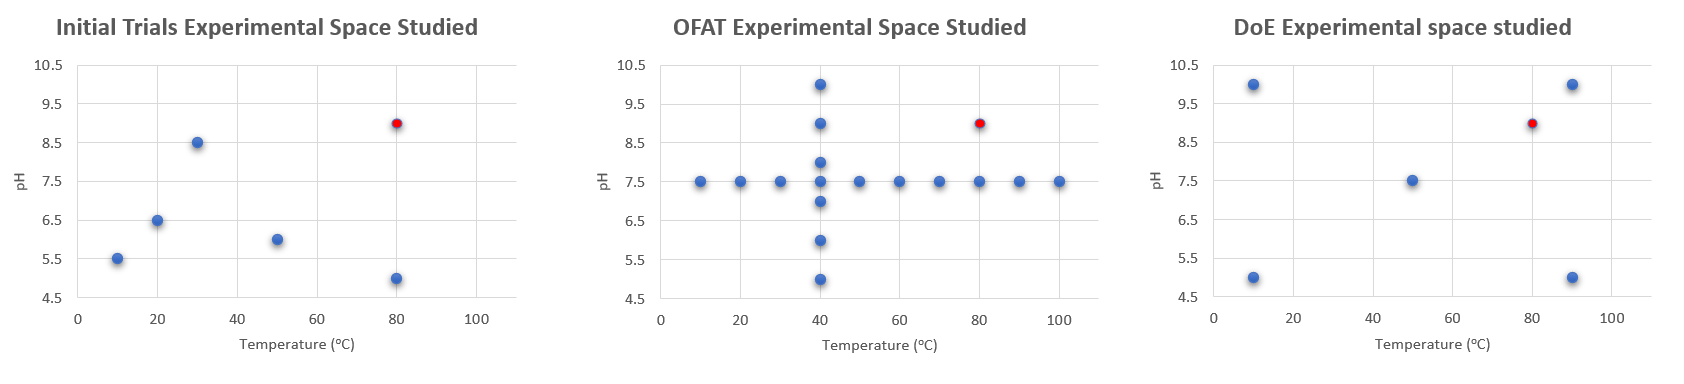 DoE blog Fig 2 OFAT versus DoE Experimental Space Studied